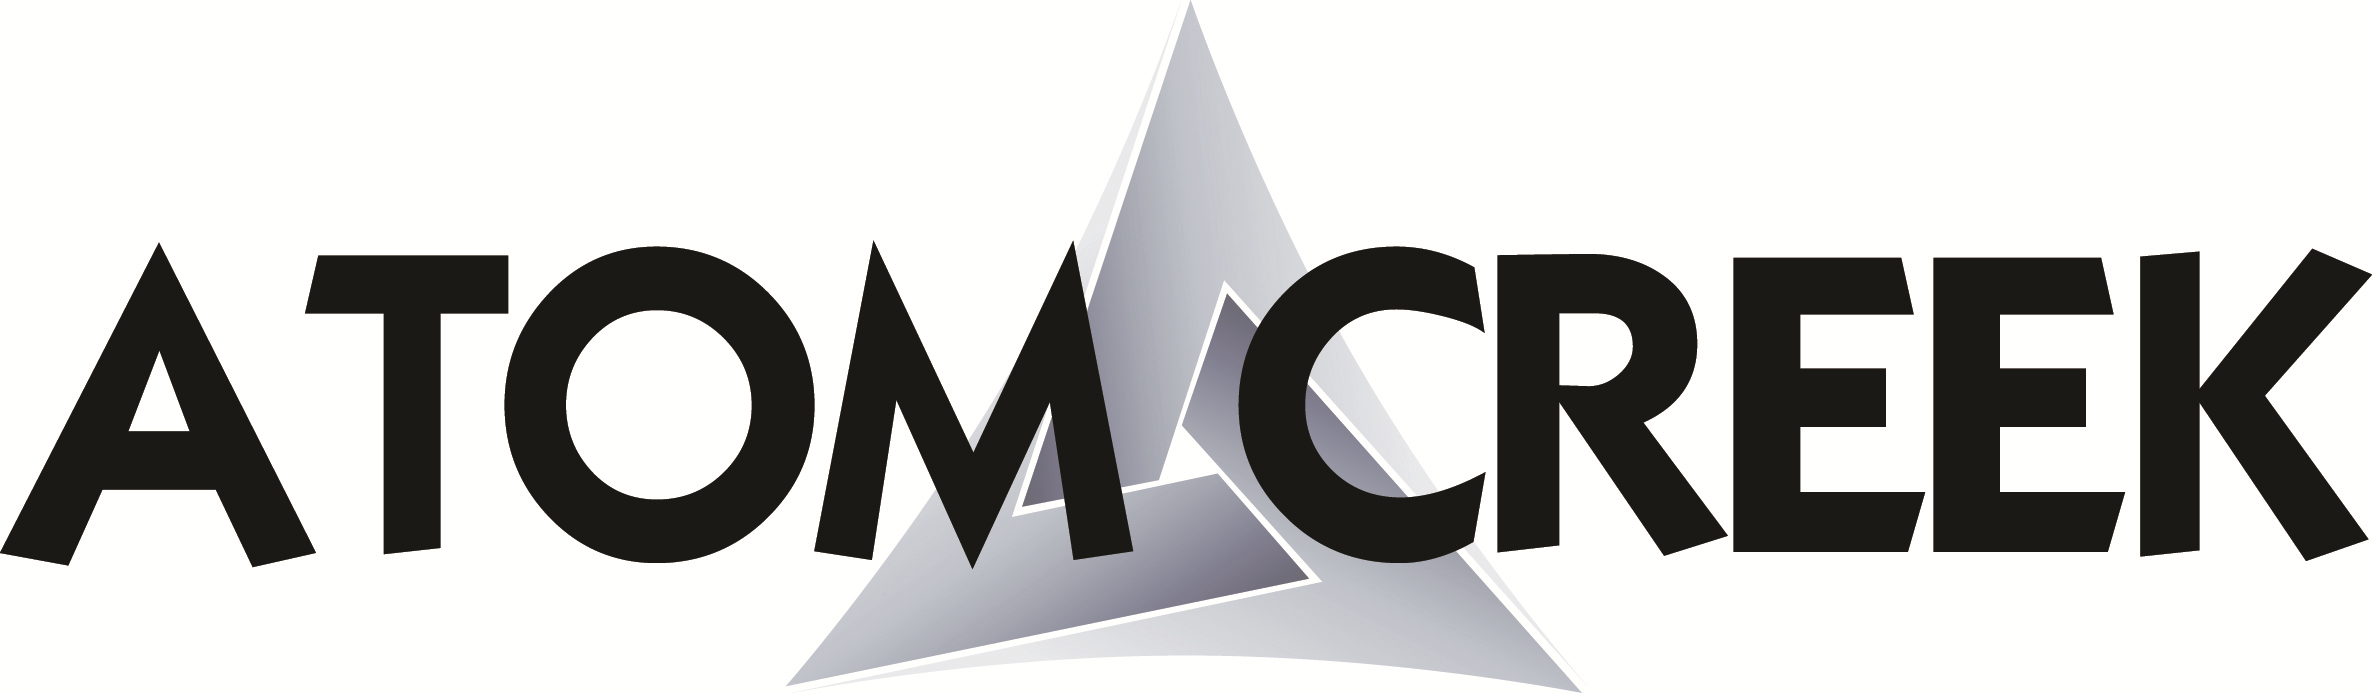 atom creek logo